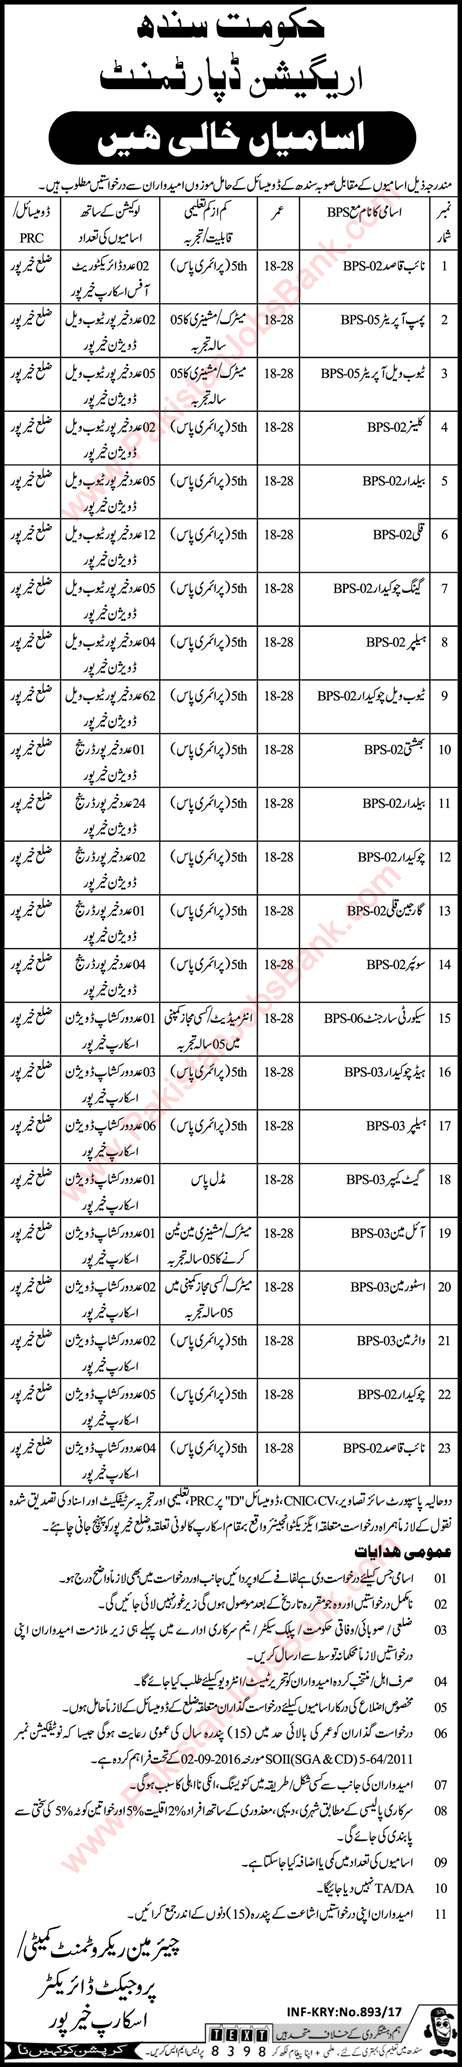 Irrigation Department Sindh Jobs 2017 February Khairpur Chowkidar, Baildar, Naib Qasid & Others Latest